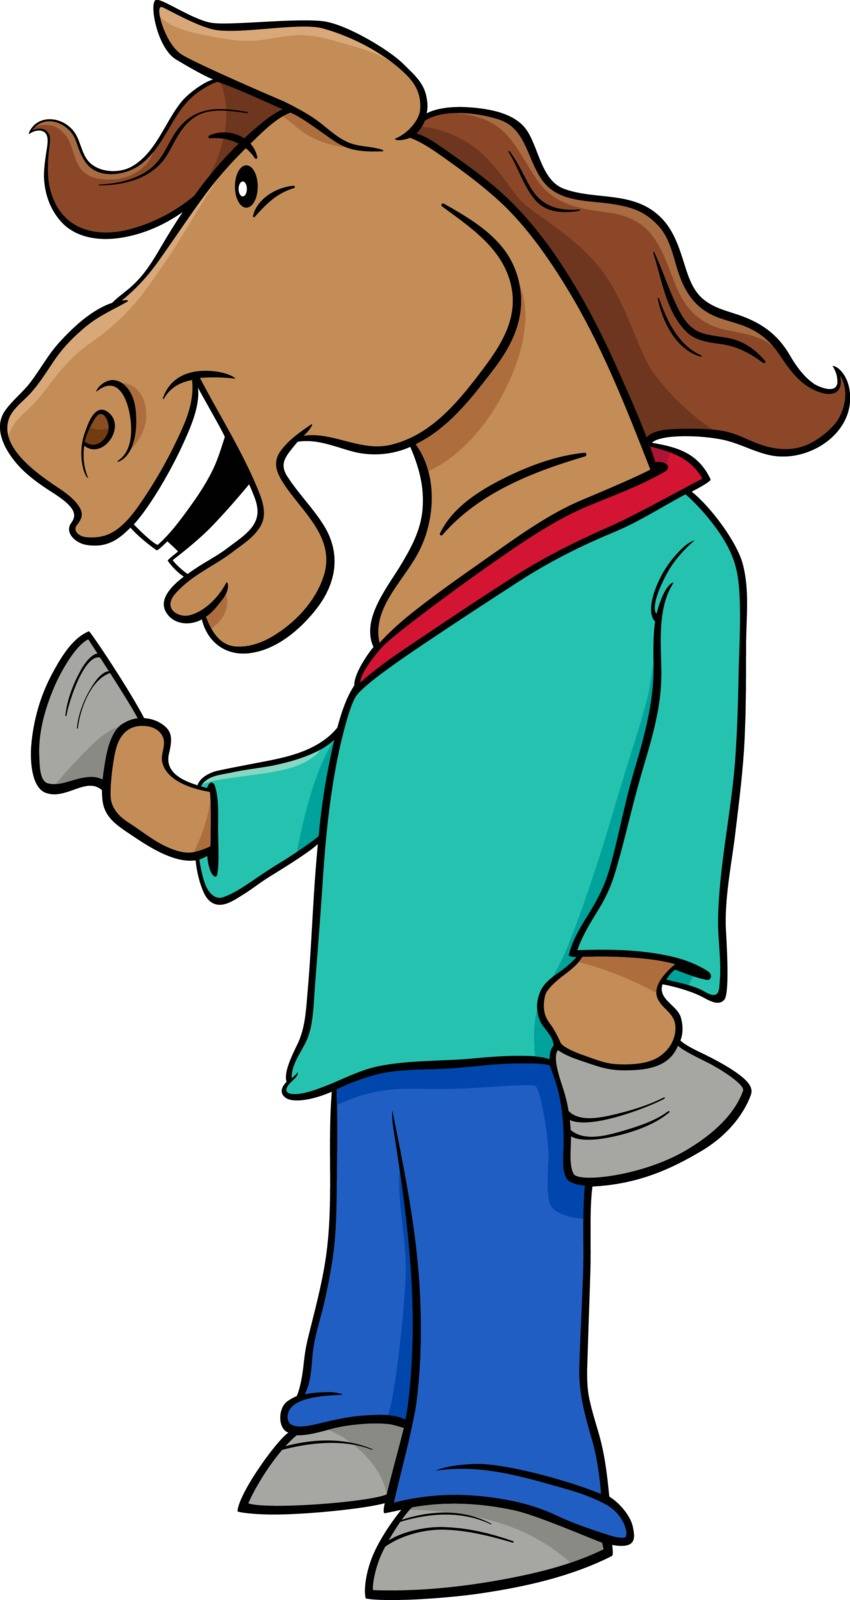 Cartoon Illustration of Anthropomorphic Horse Fantasy Character